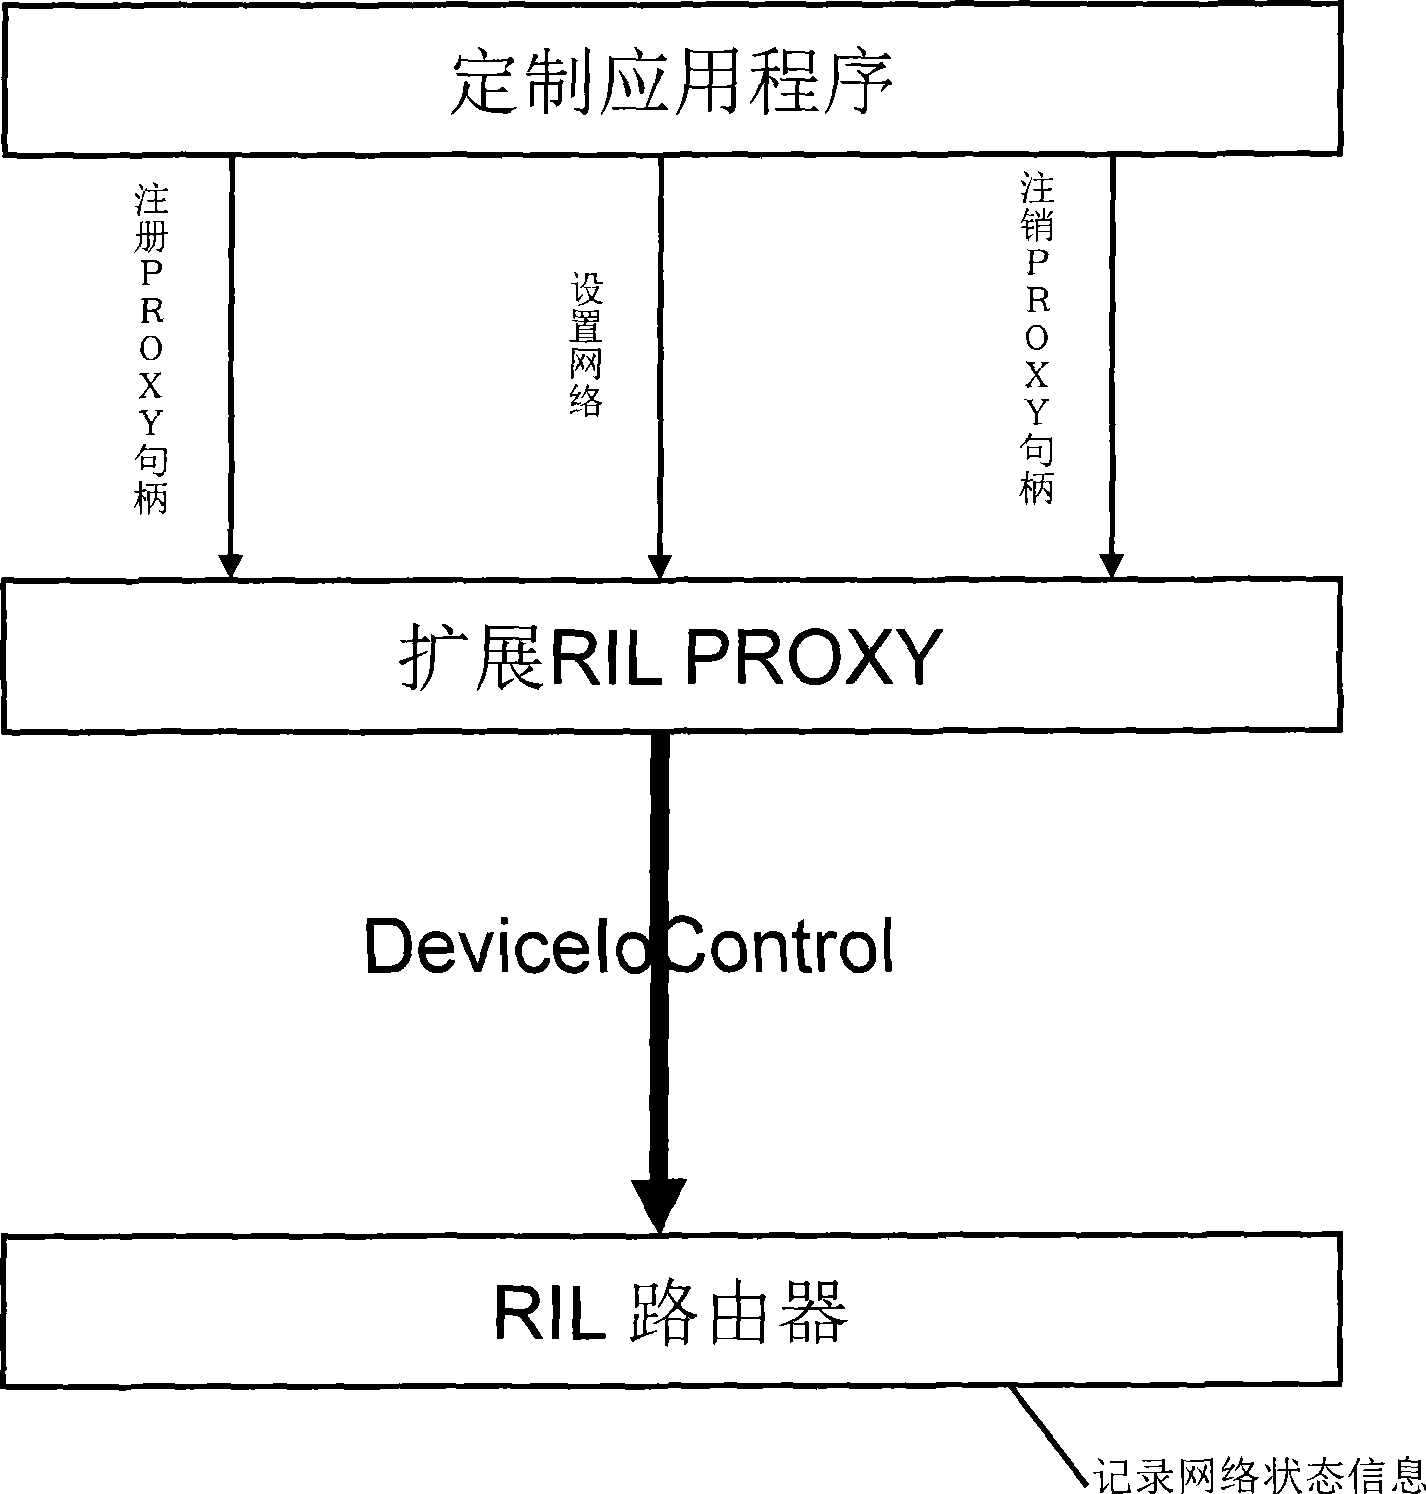 Expaned RIL PROXY apparatus based on Windows Mobile platform